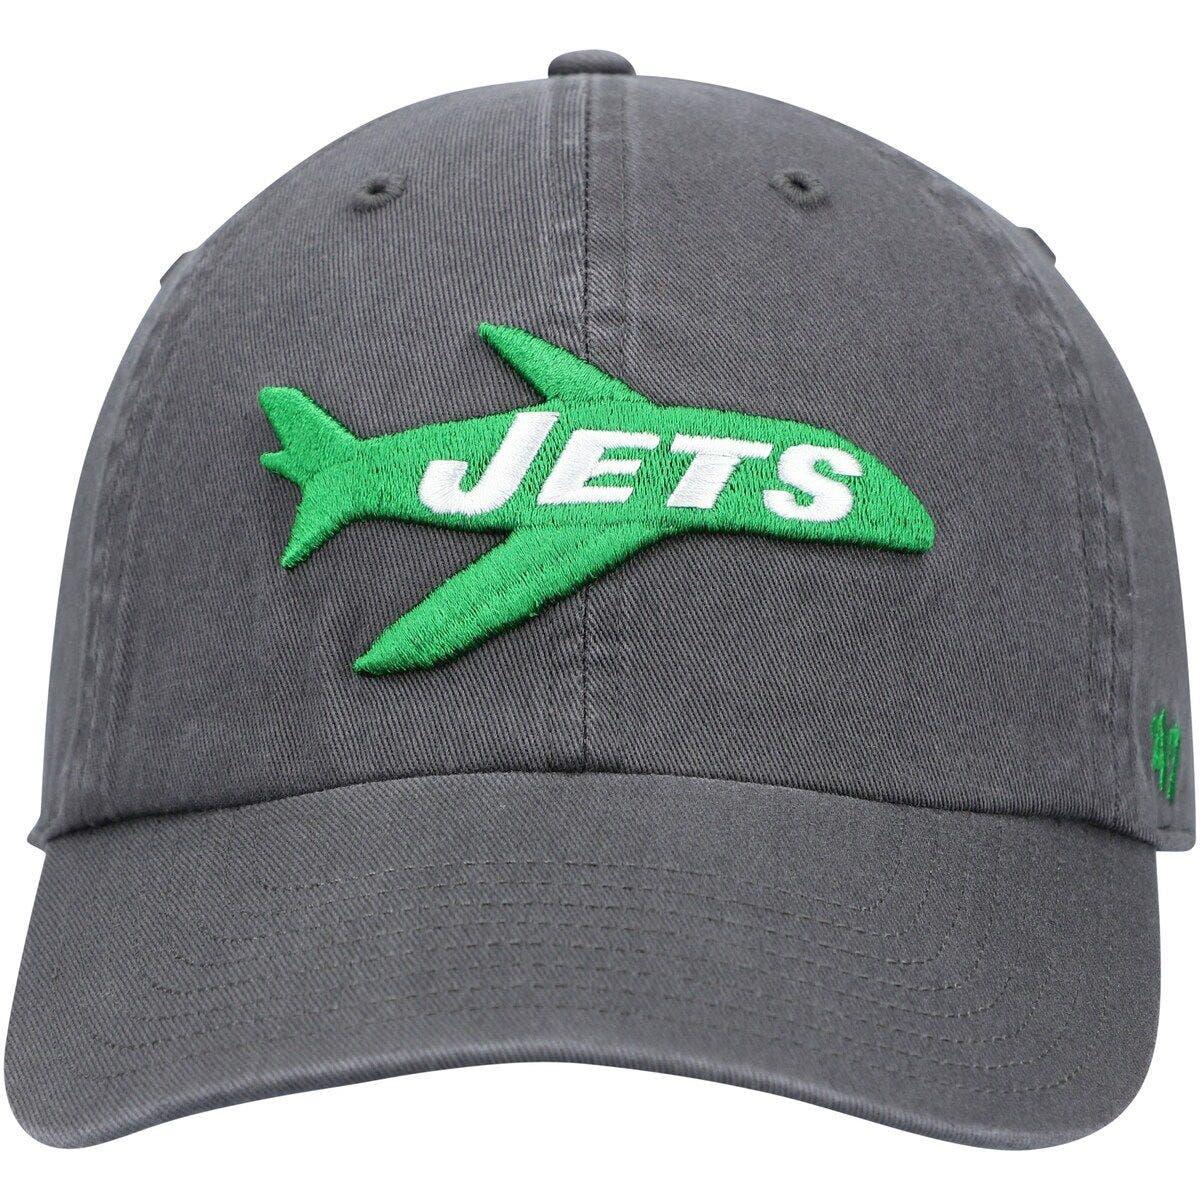 new york jets airplane hat